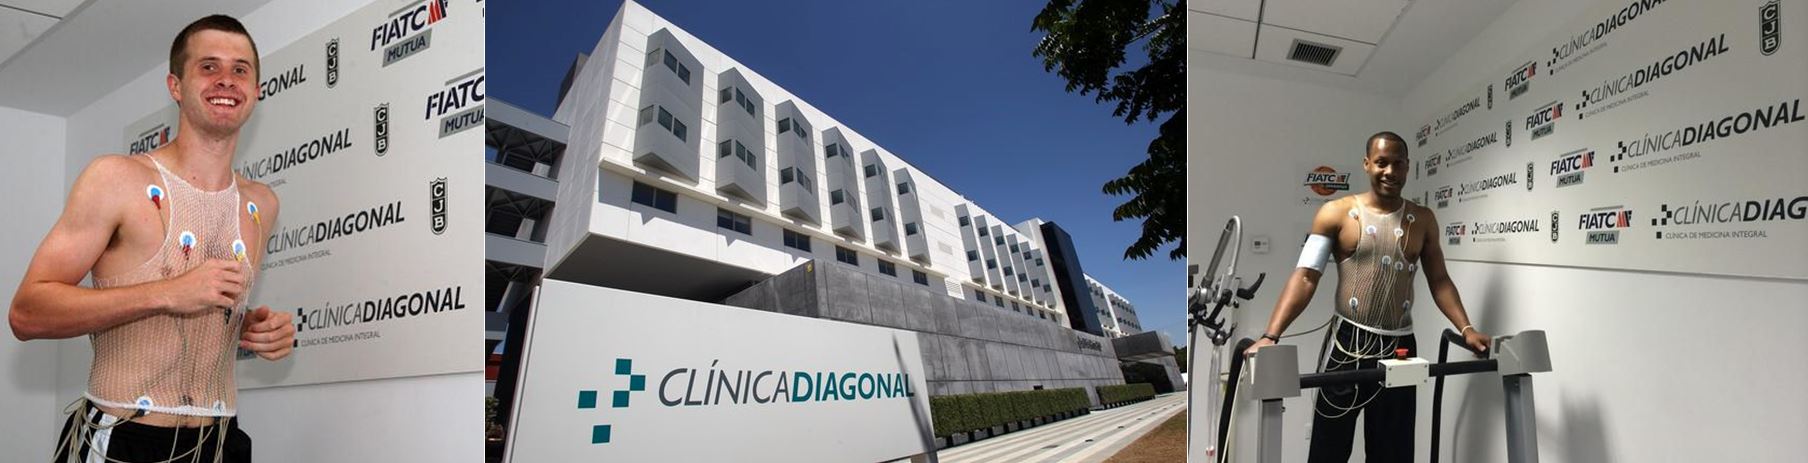 Diagonal Clinic - Barcelona Espain - traumatology and orthopedic surgery - Clínica Diagonal